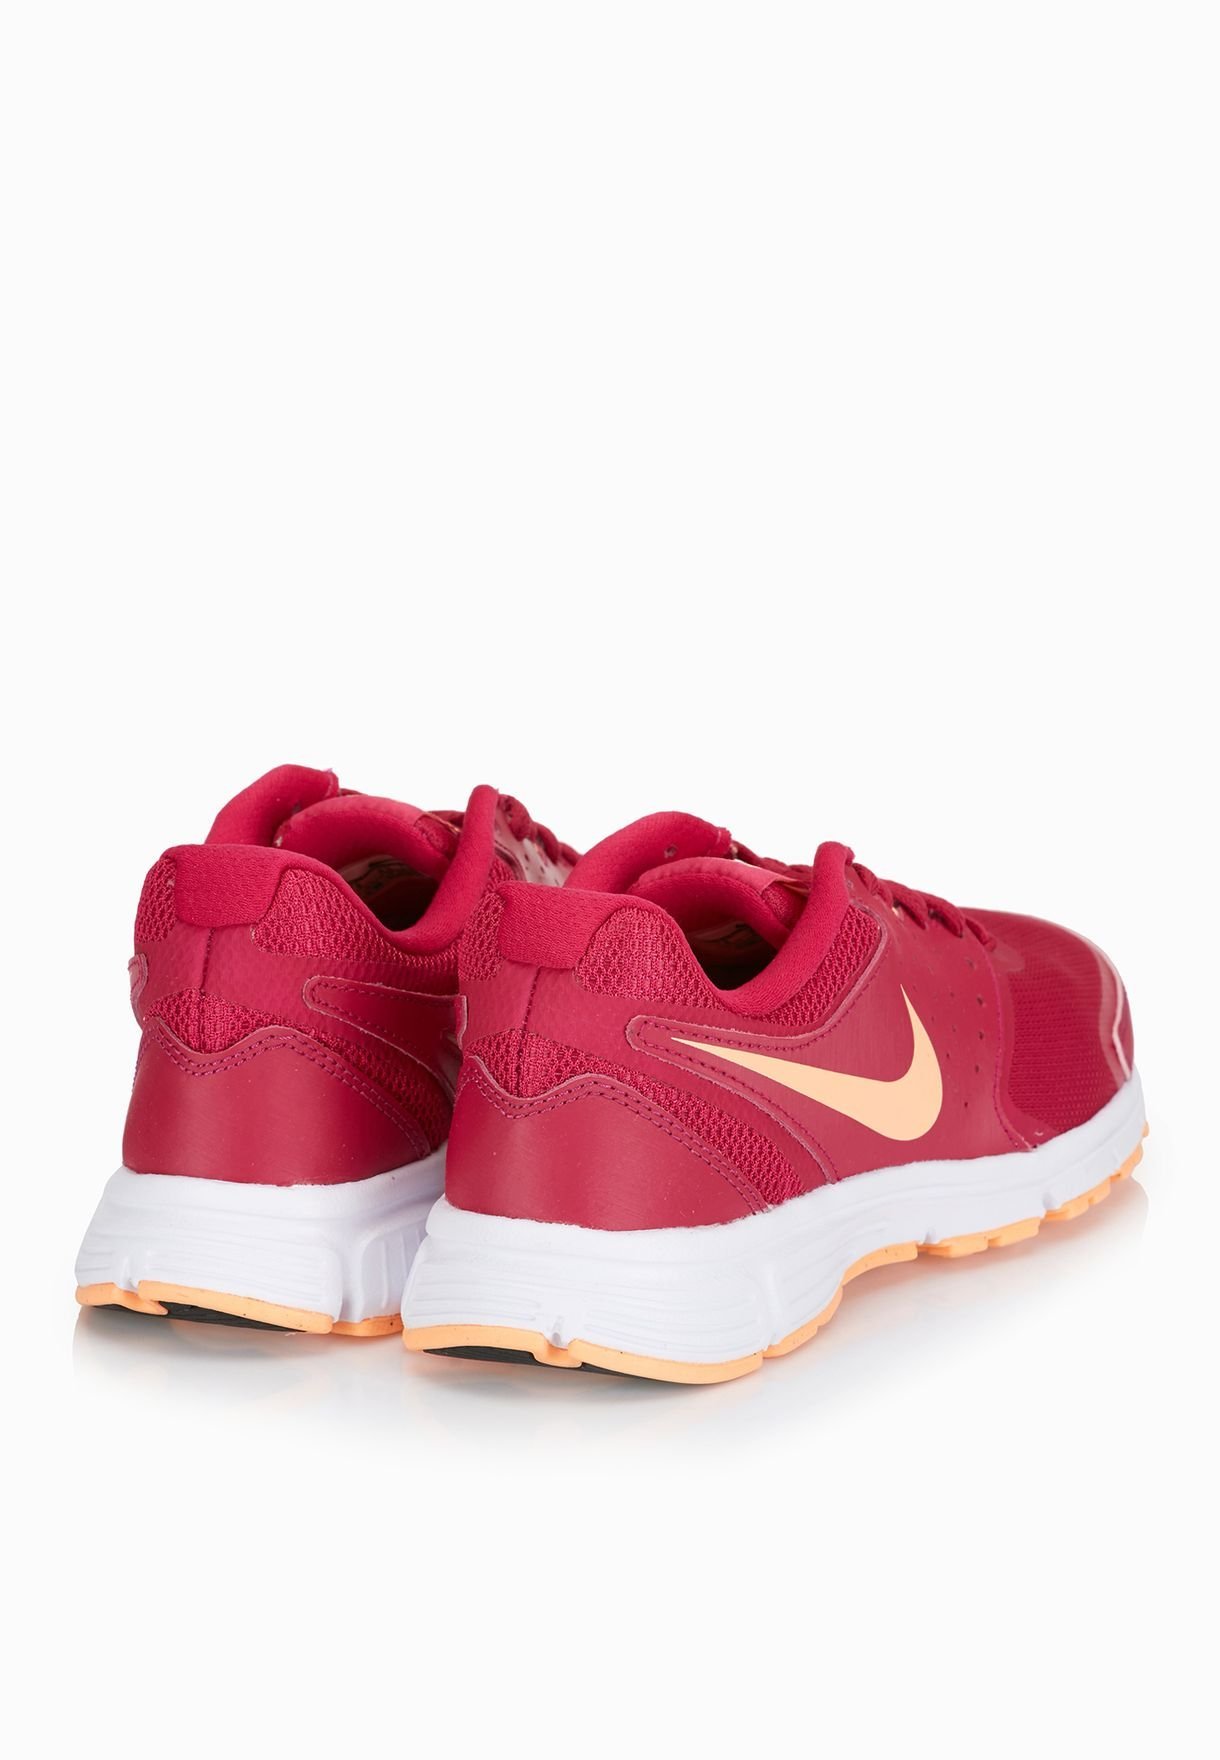 Bežecká obuv Nike Revolution EU -3631210 - korálová